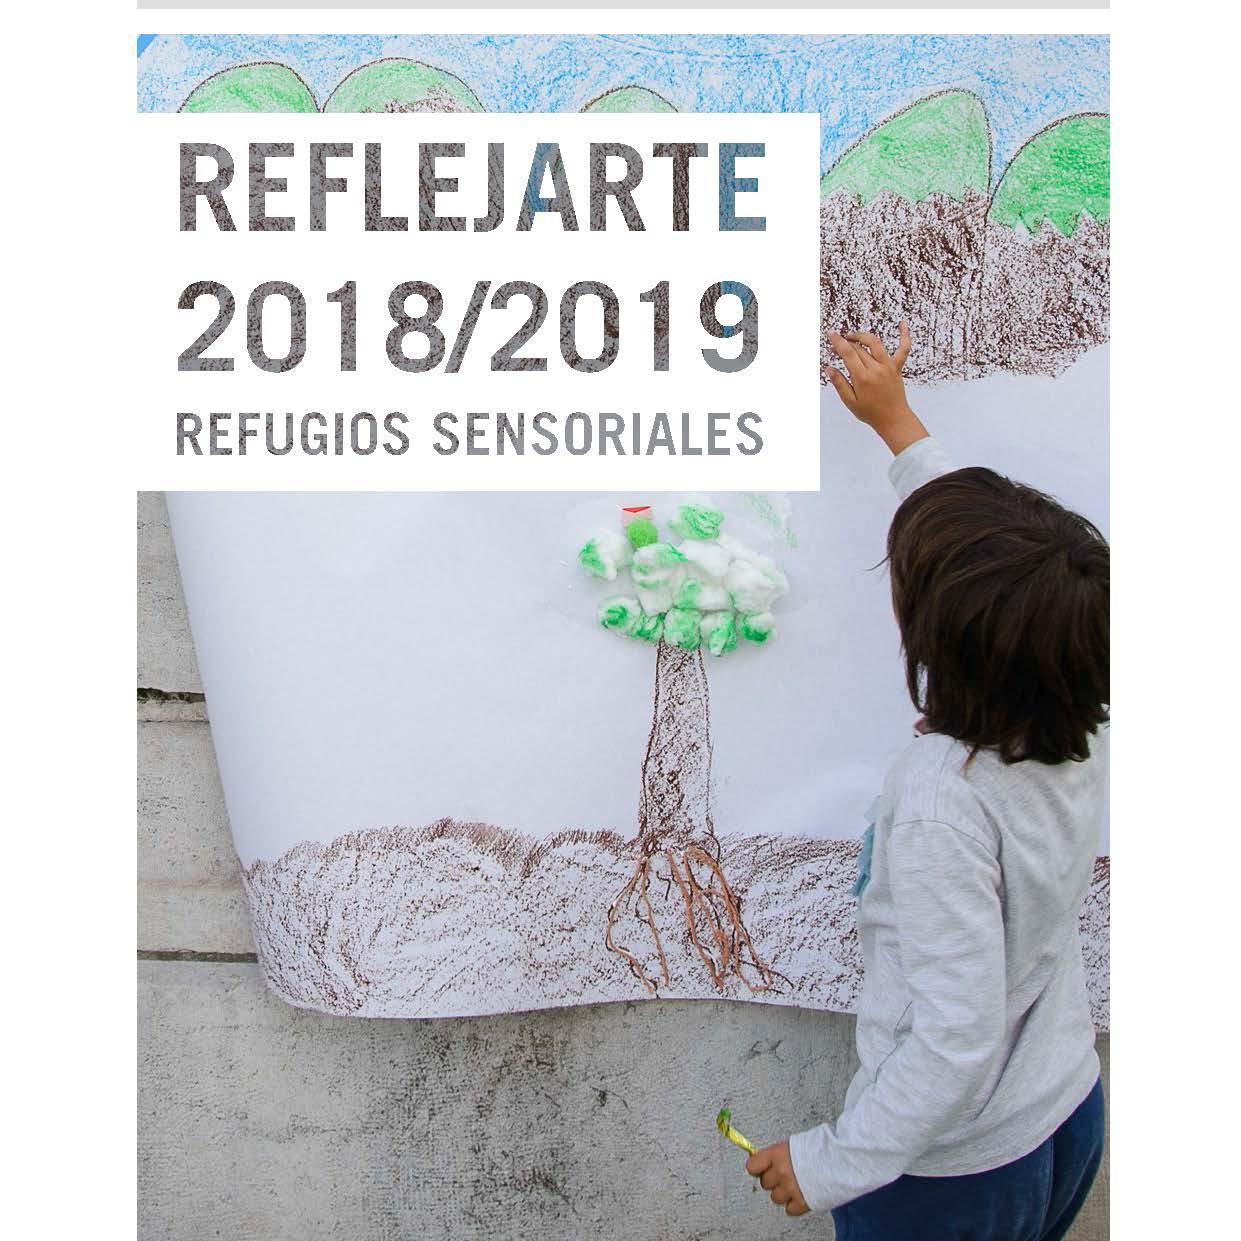 ReflejArte 2018/2019. Refugios sensoriales.